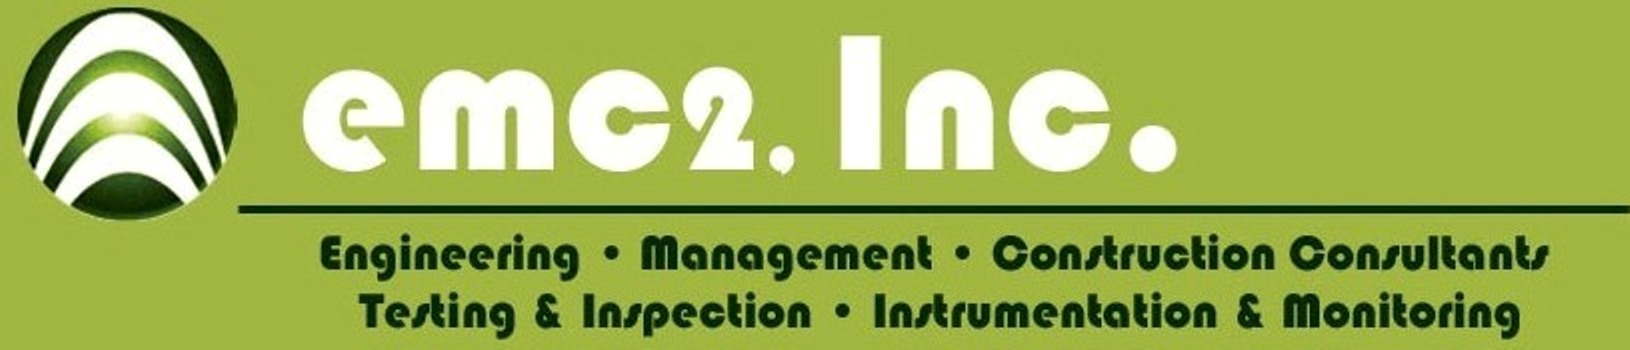 Engineering Firm EMC2, INC. logo